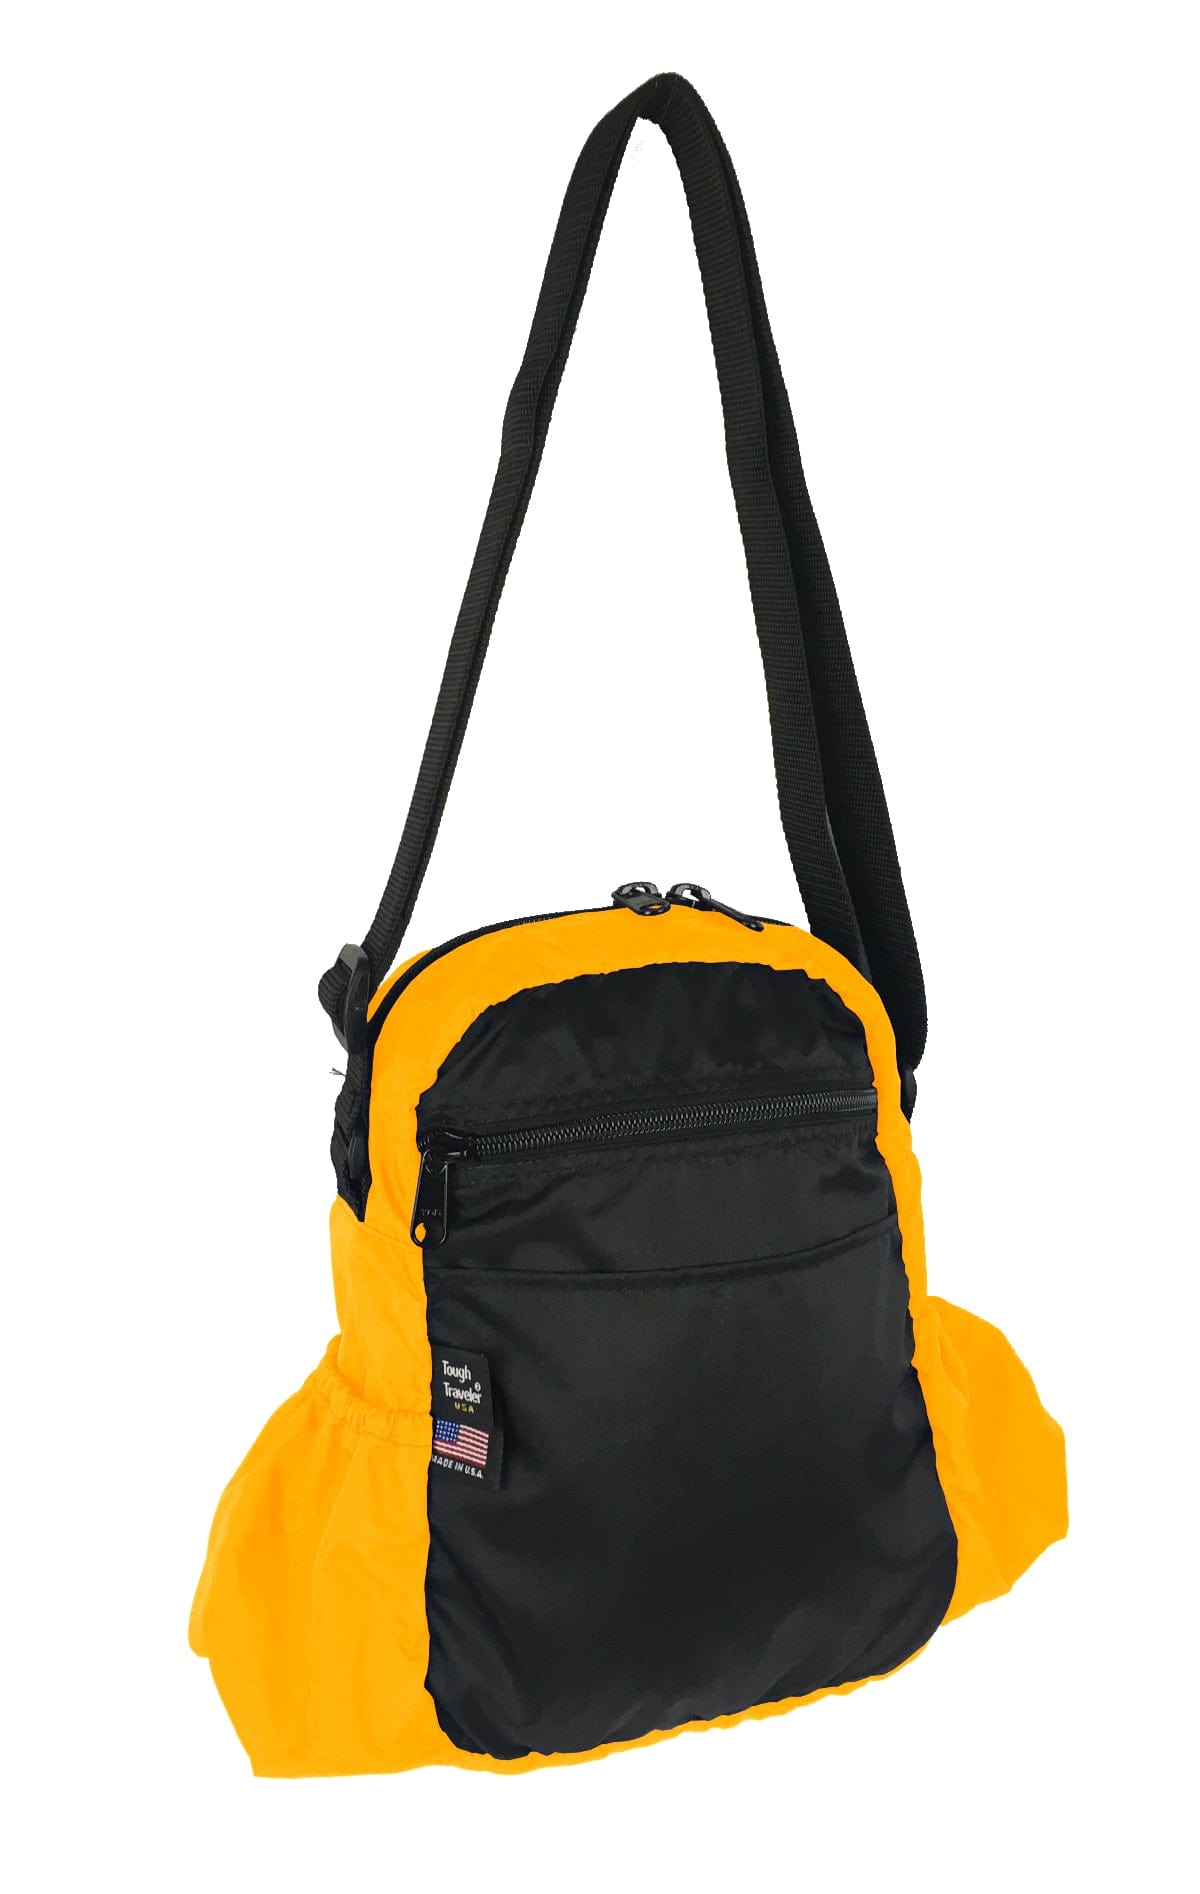 Black DAVID JONES Bag With Two Handles And Removable Shoulder Strap.